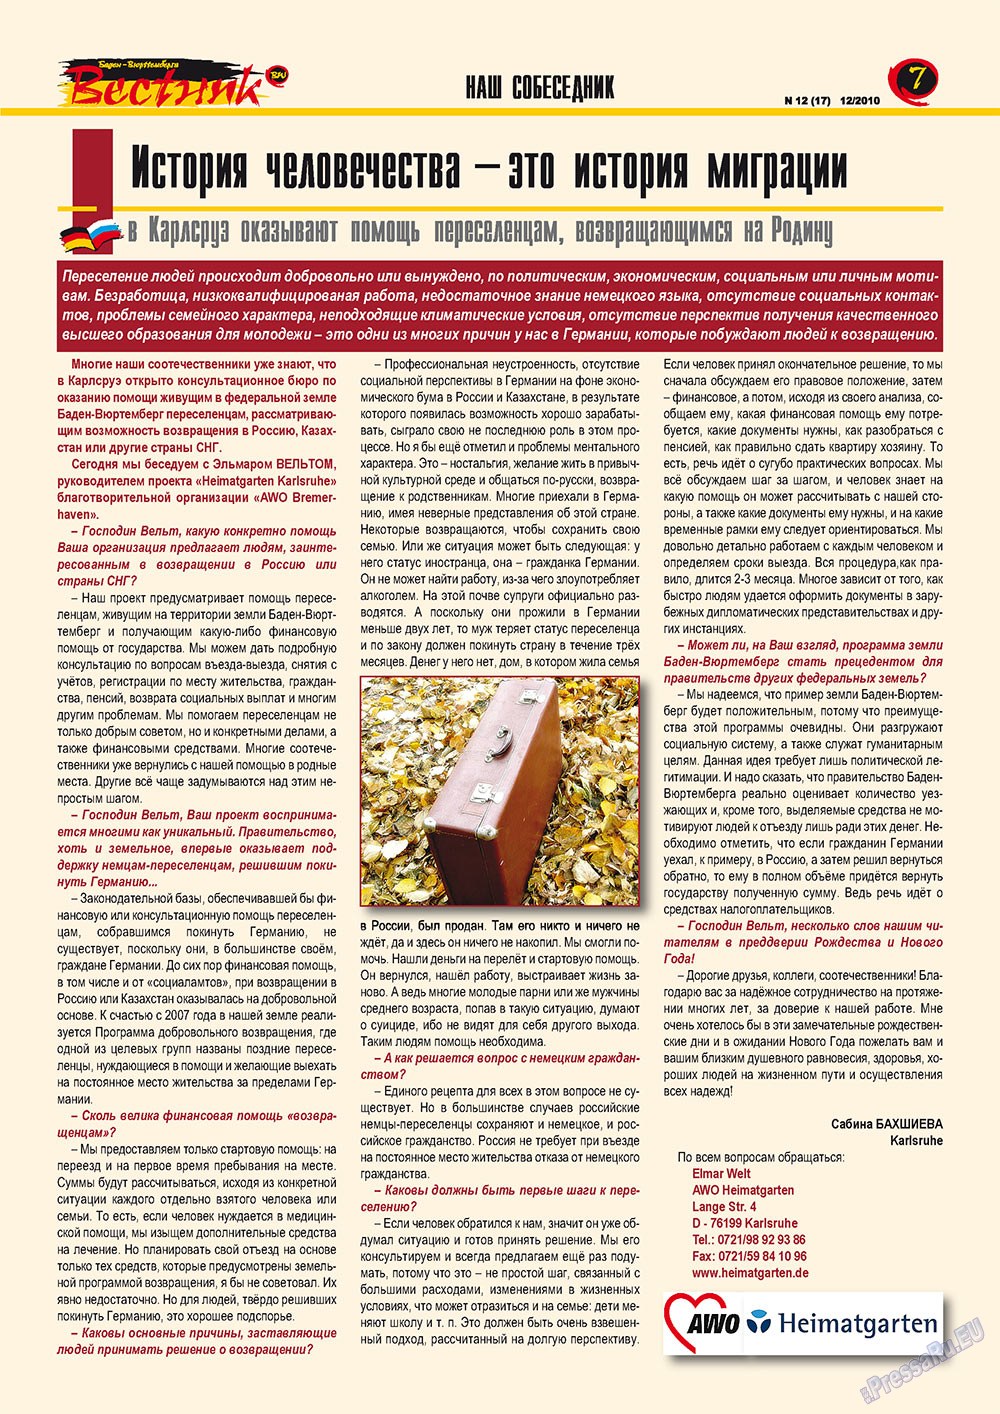 Вестник-info (журнал). 2010 год, номер 12, стр. 7